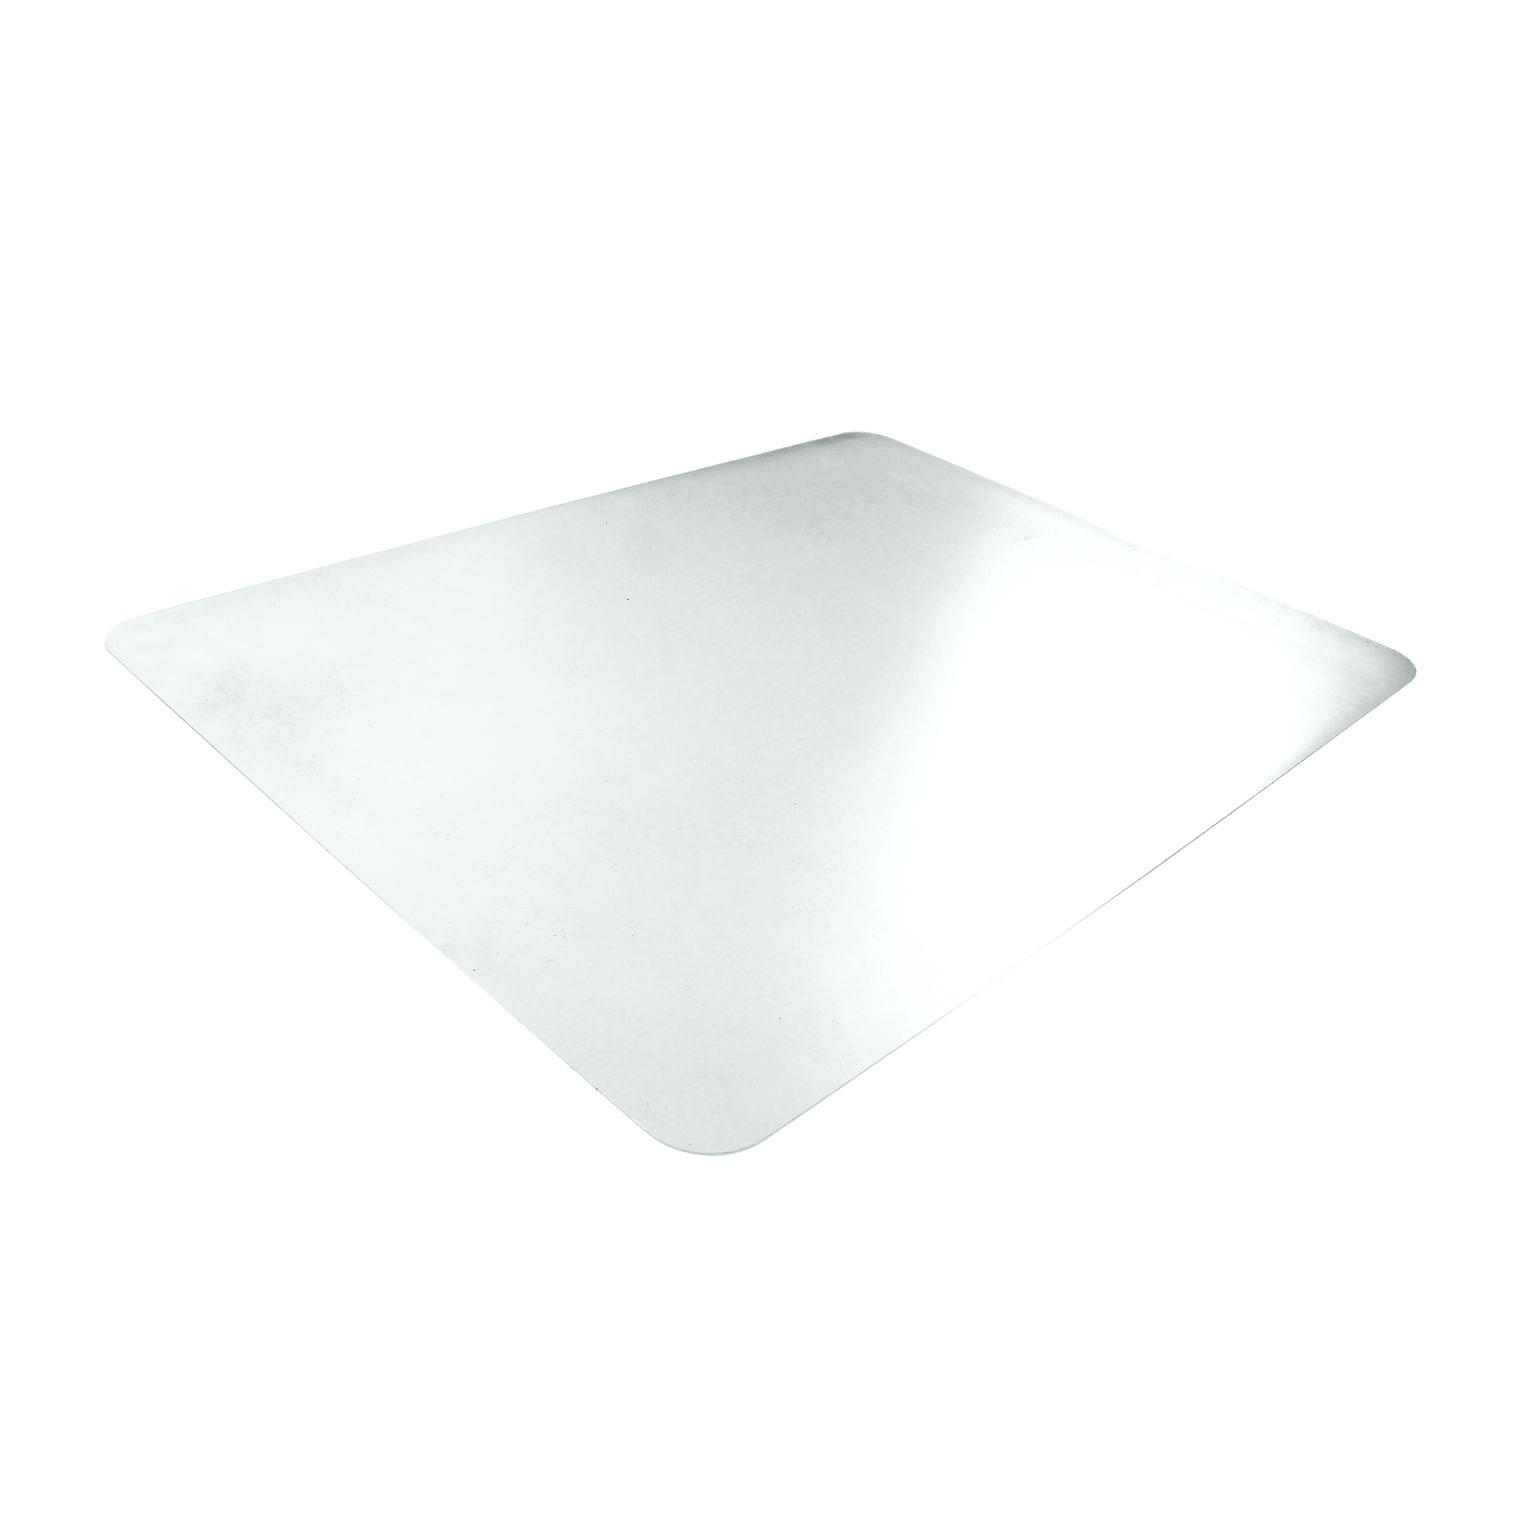 Floortex Desktex Anti-Slip Backed Polycarbonate Desk Pads, 17 x 22, Clear, 2/Pk (FPDE1722RA2)